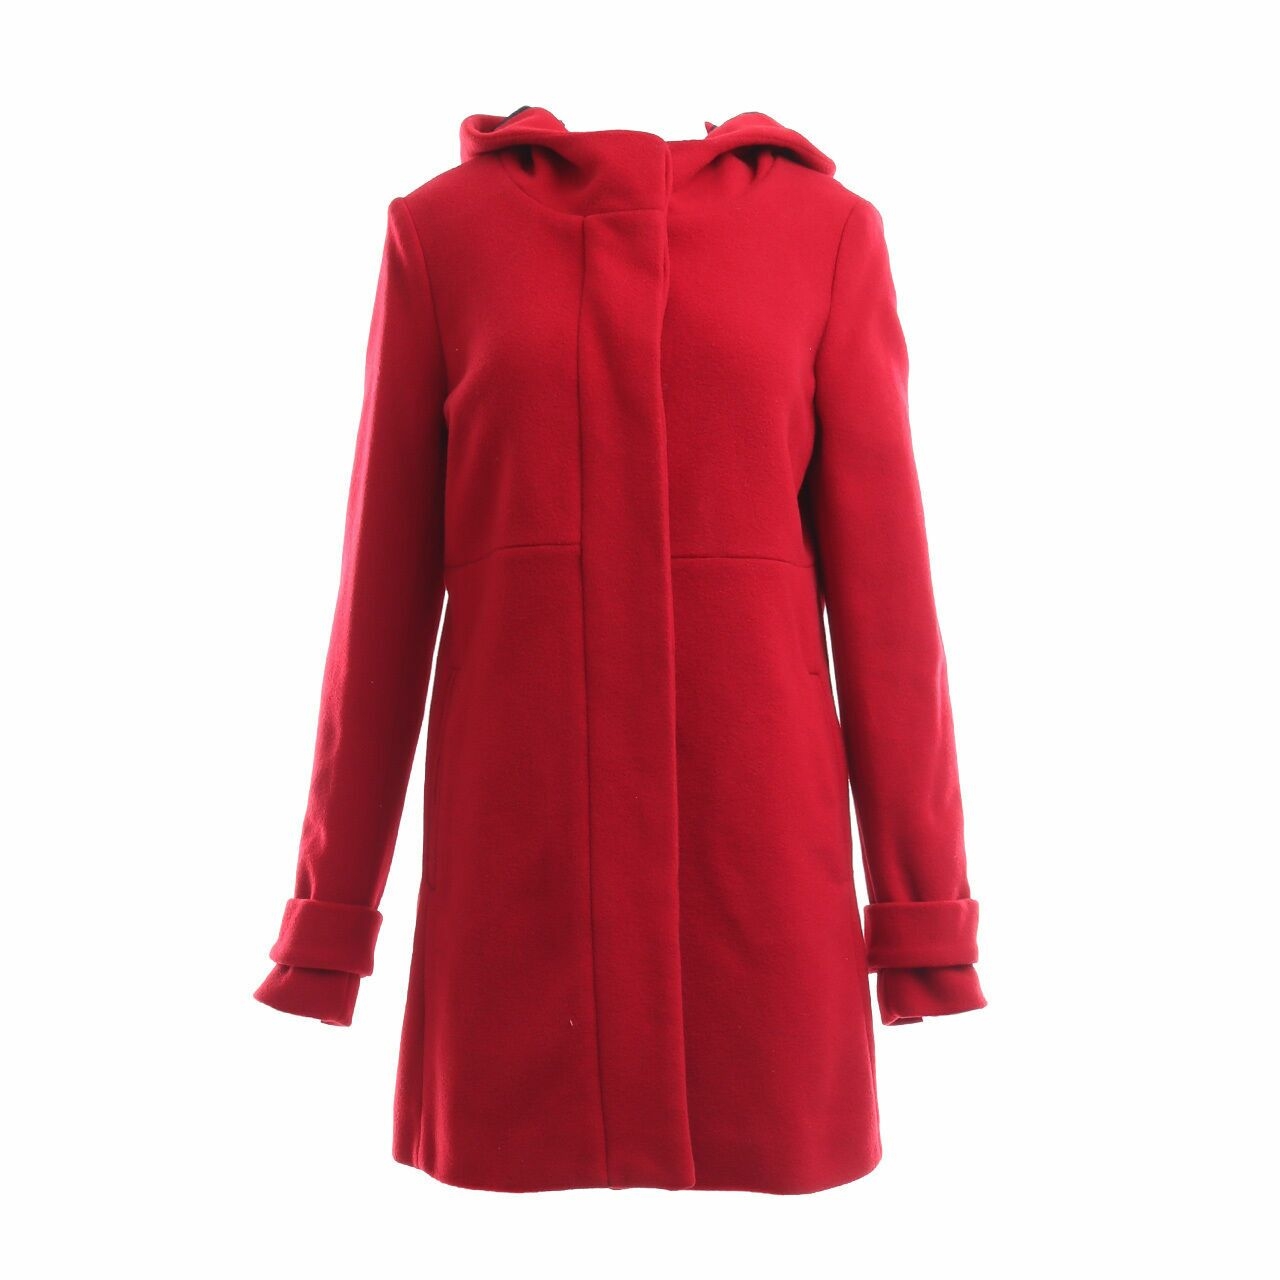 Zara Red Coat